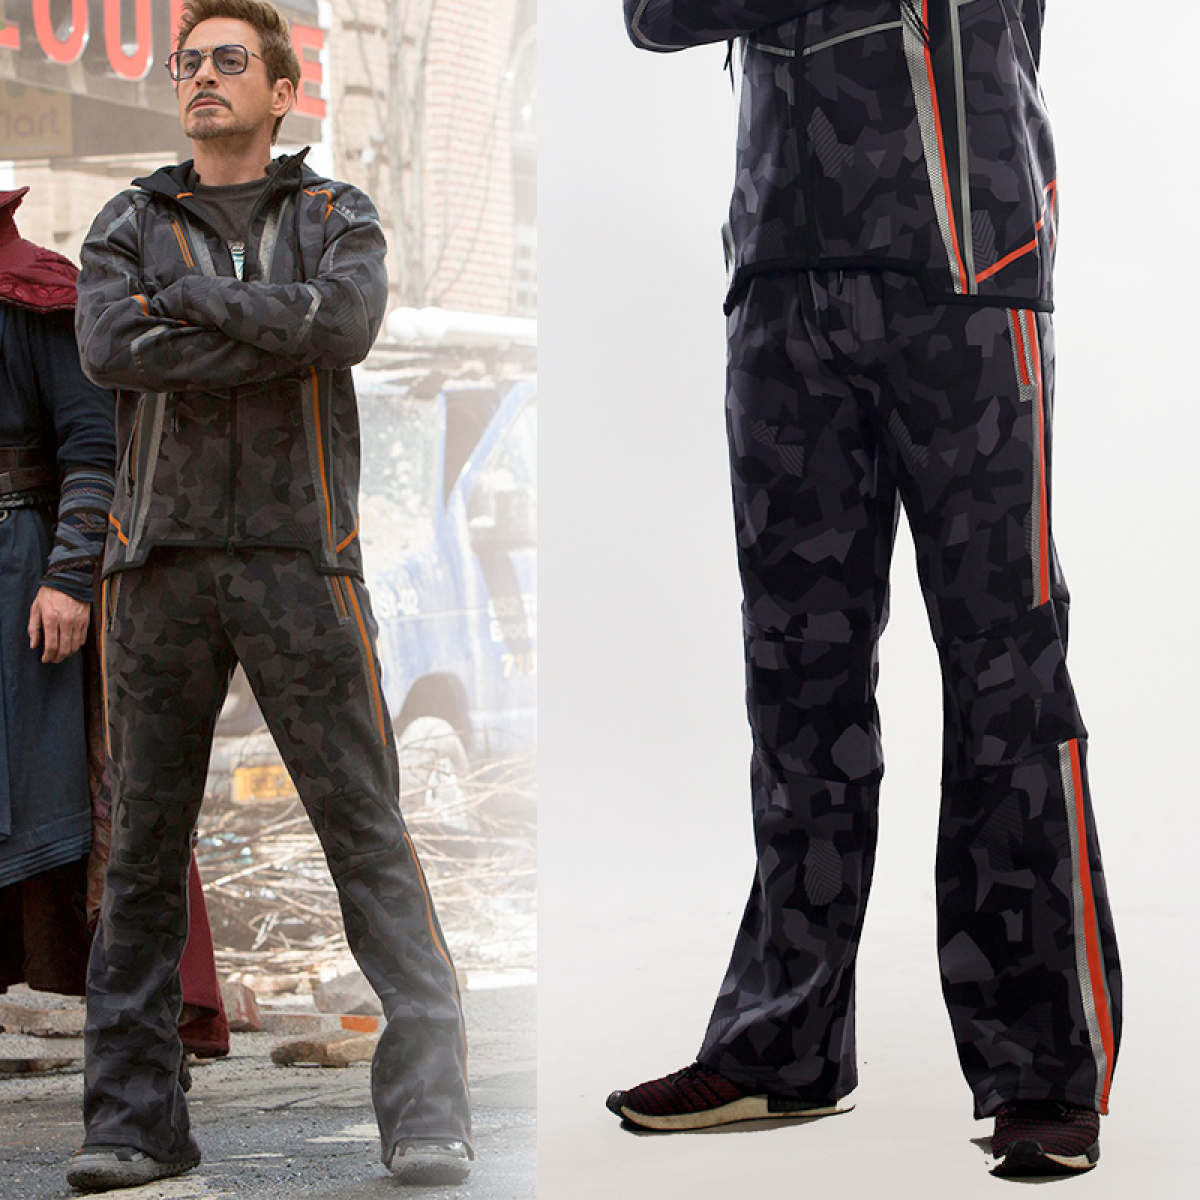 Tony Stark Avengers Infinity War Iron Man Camouflage Sweat Track Pants Trousers 